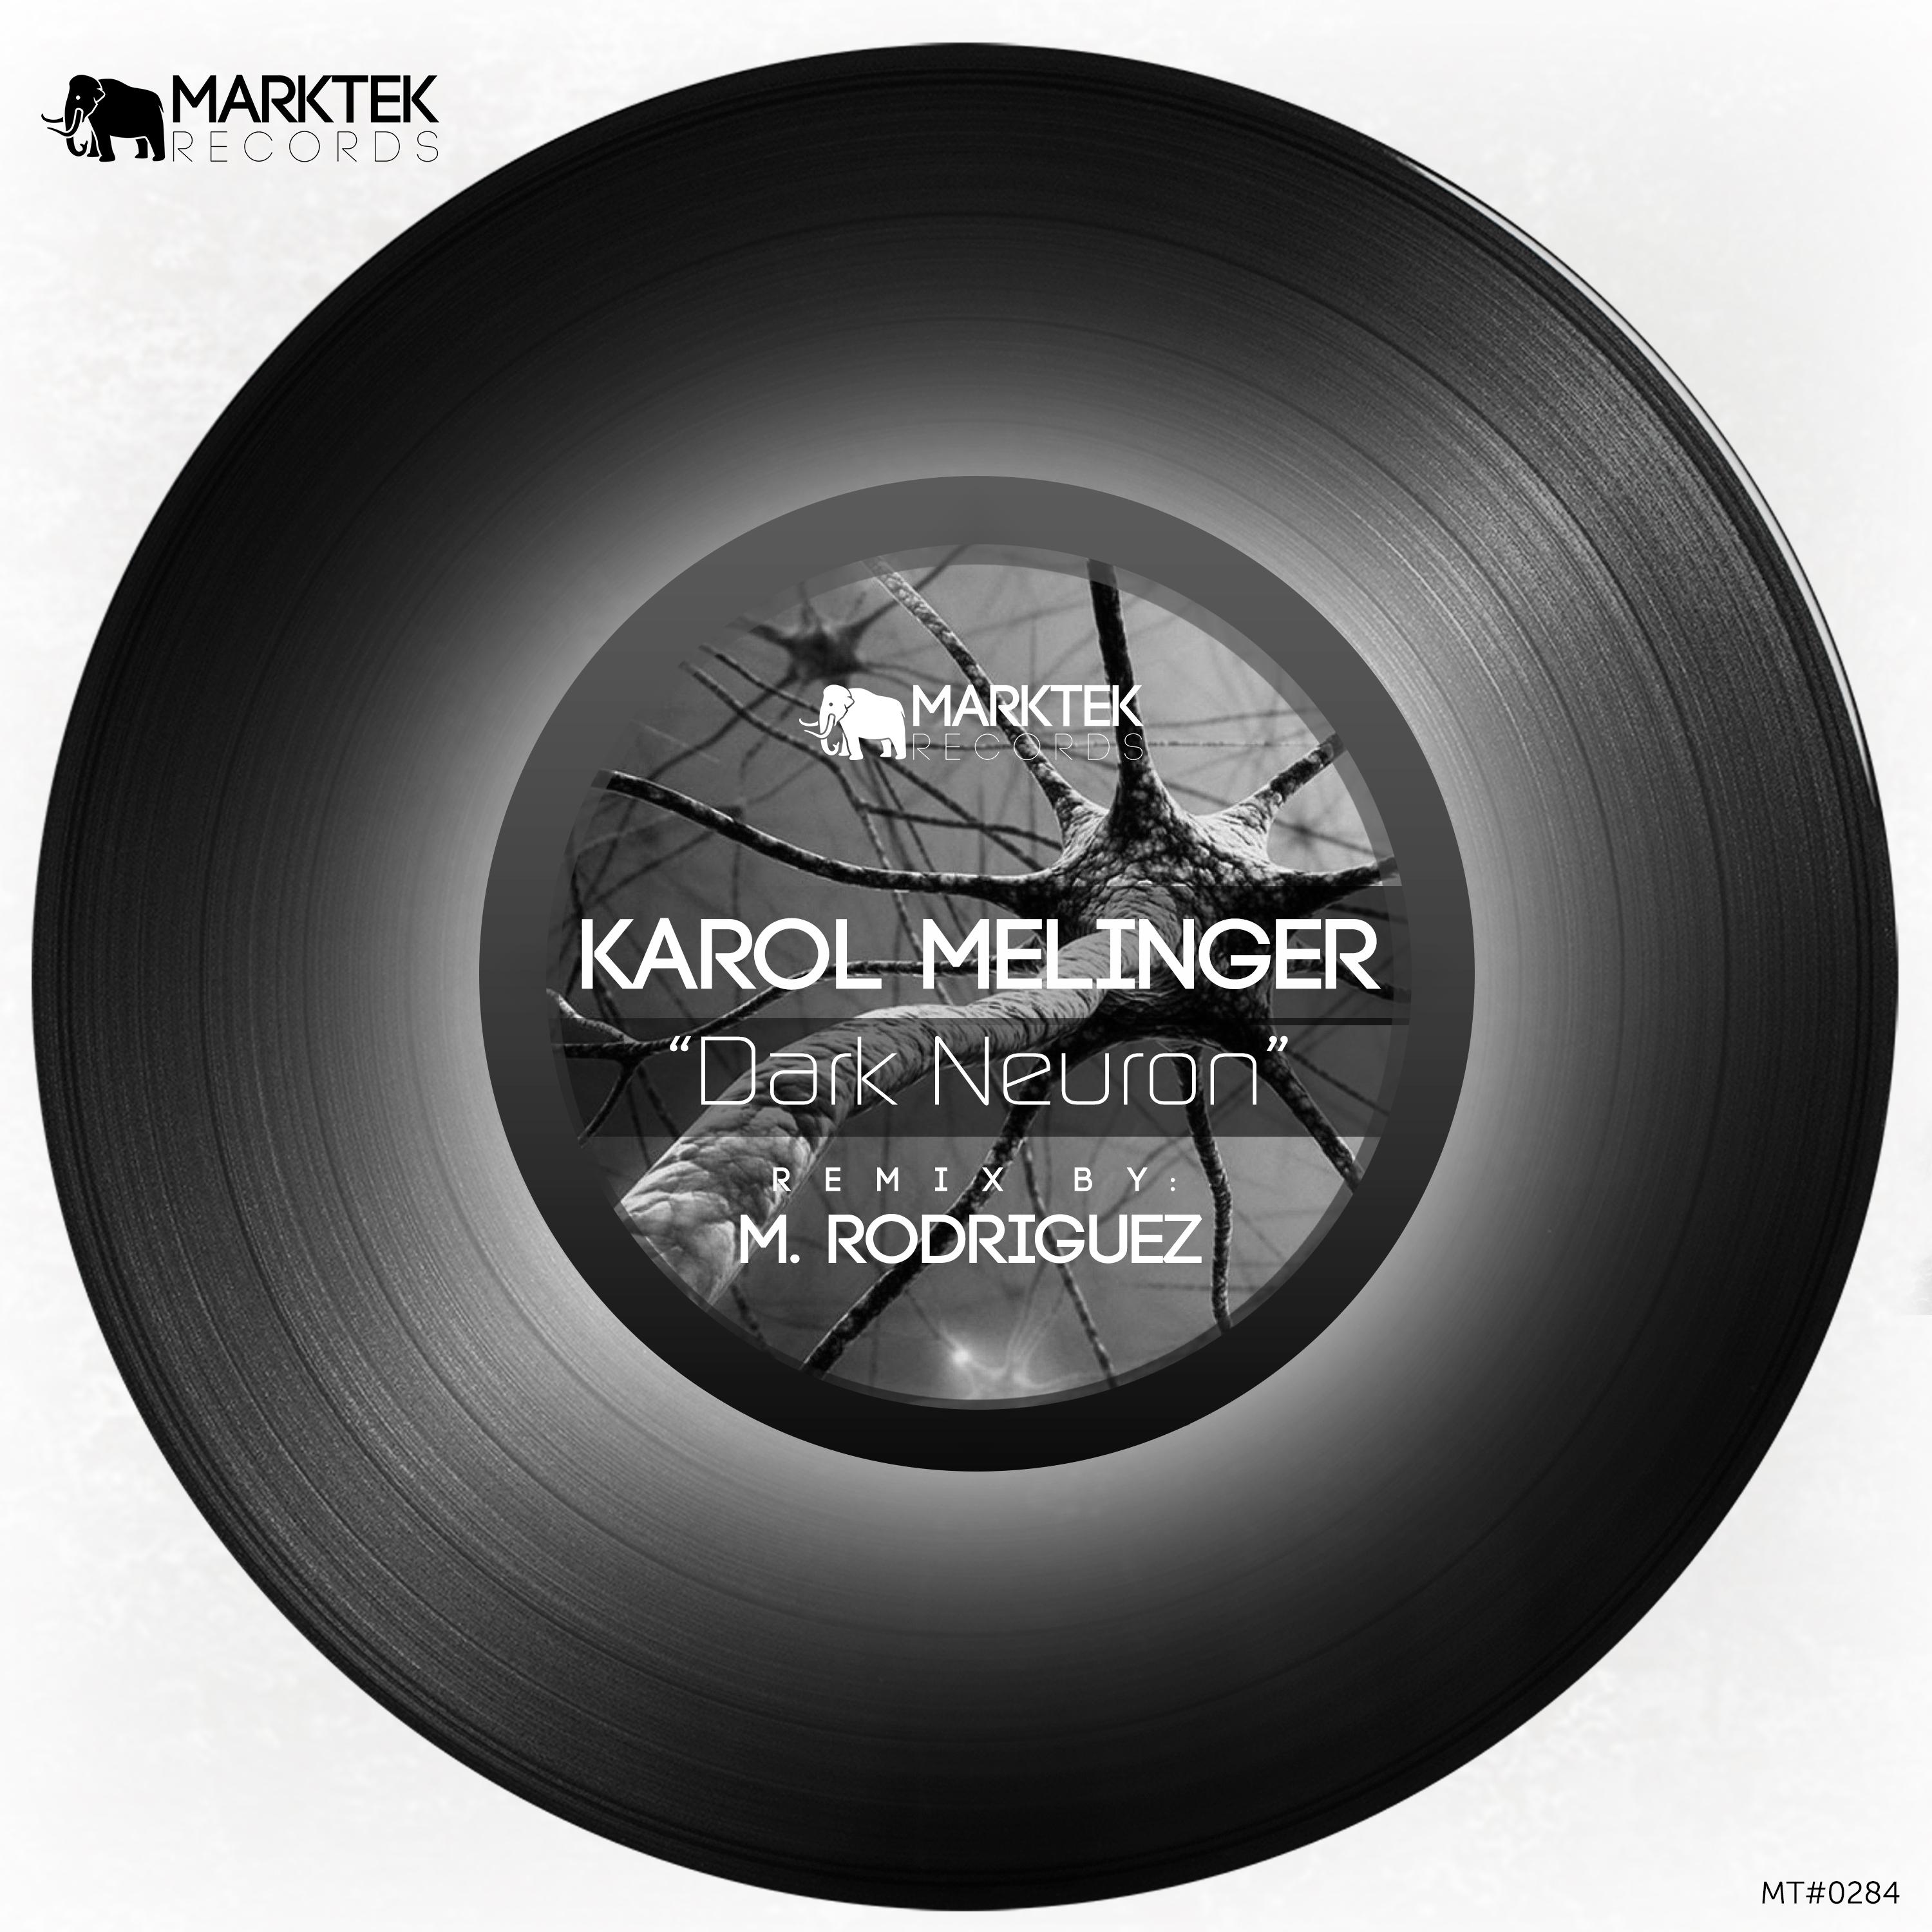 Karol Melinger - Dark Neuron (M. Rodriguez Remix)